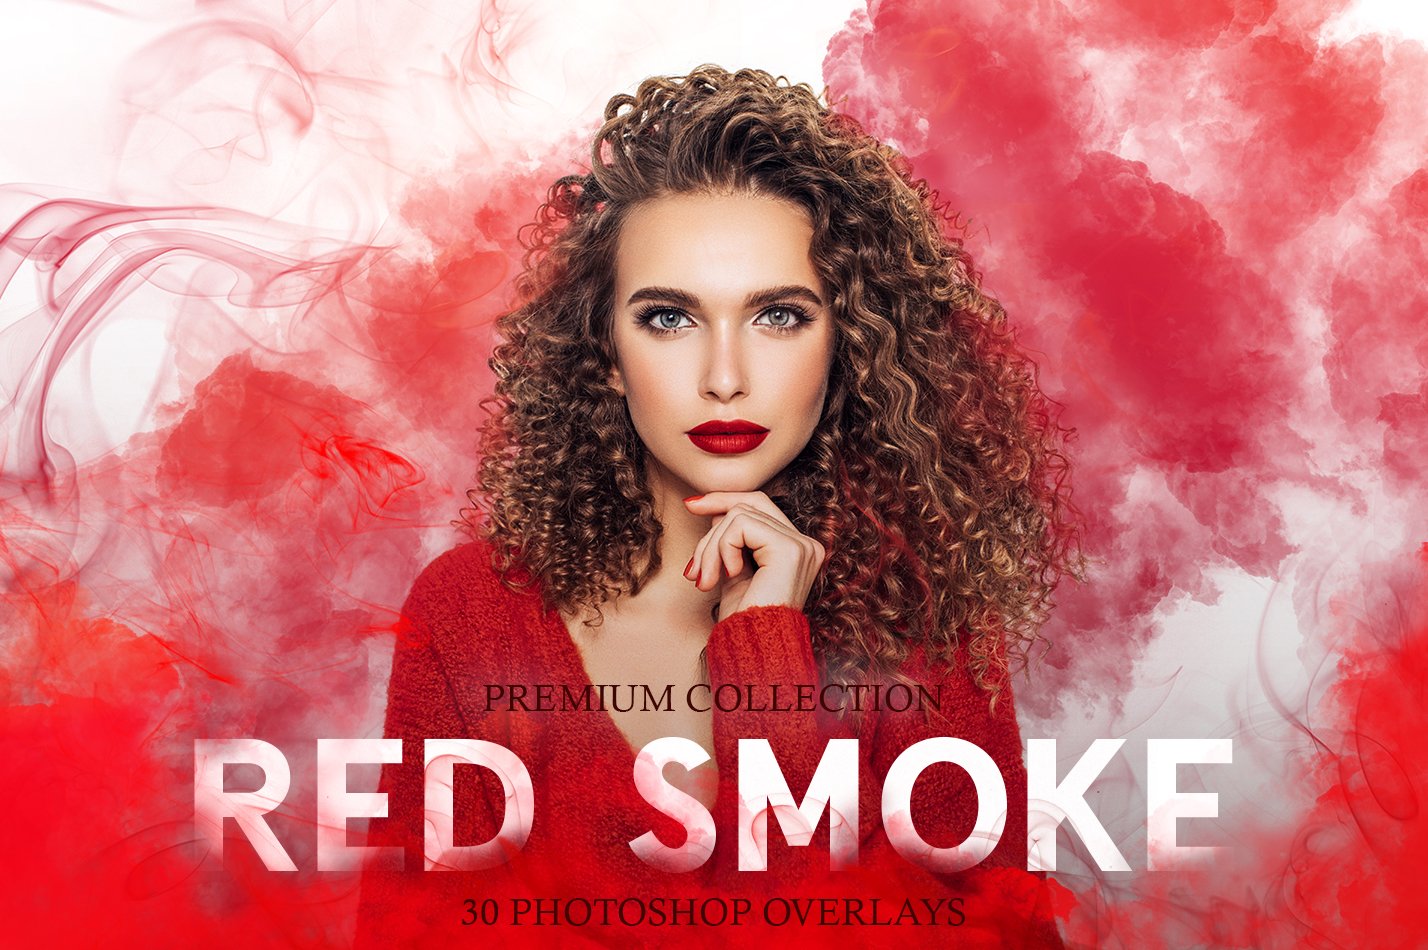 Red Smoke Photoshop Overlayscover image.